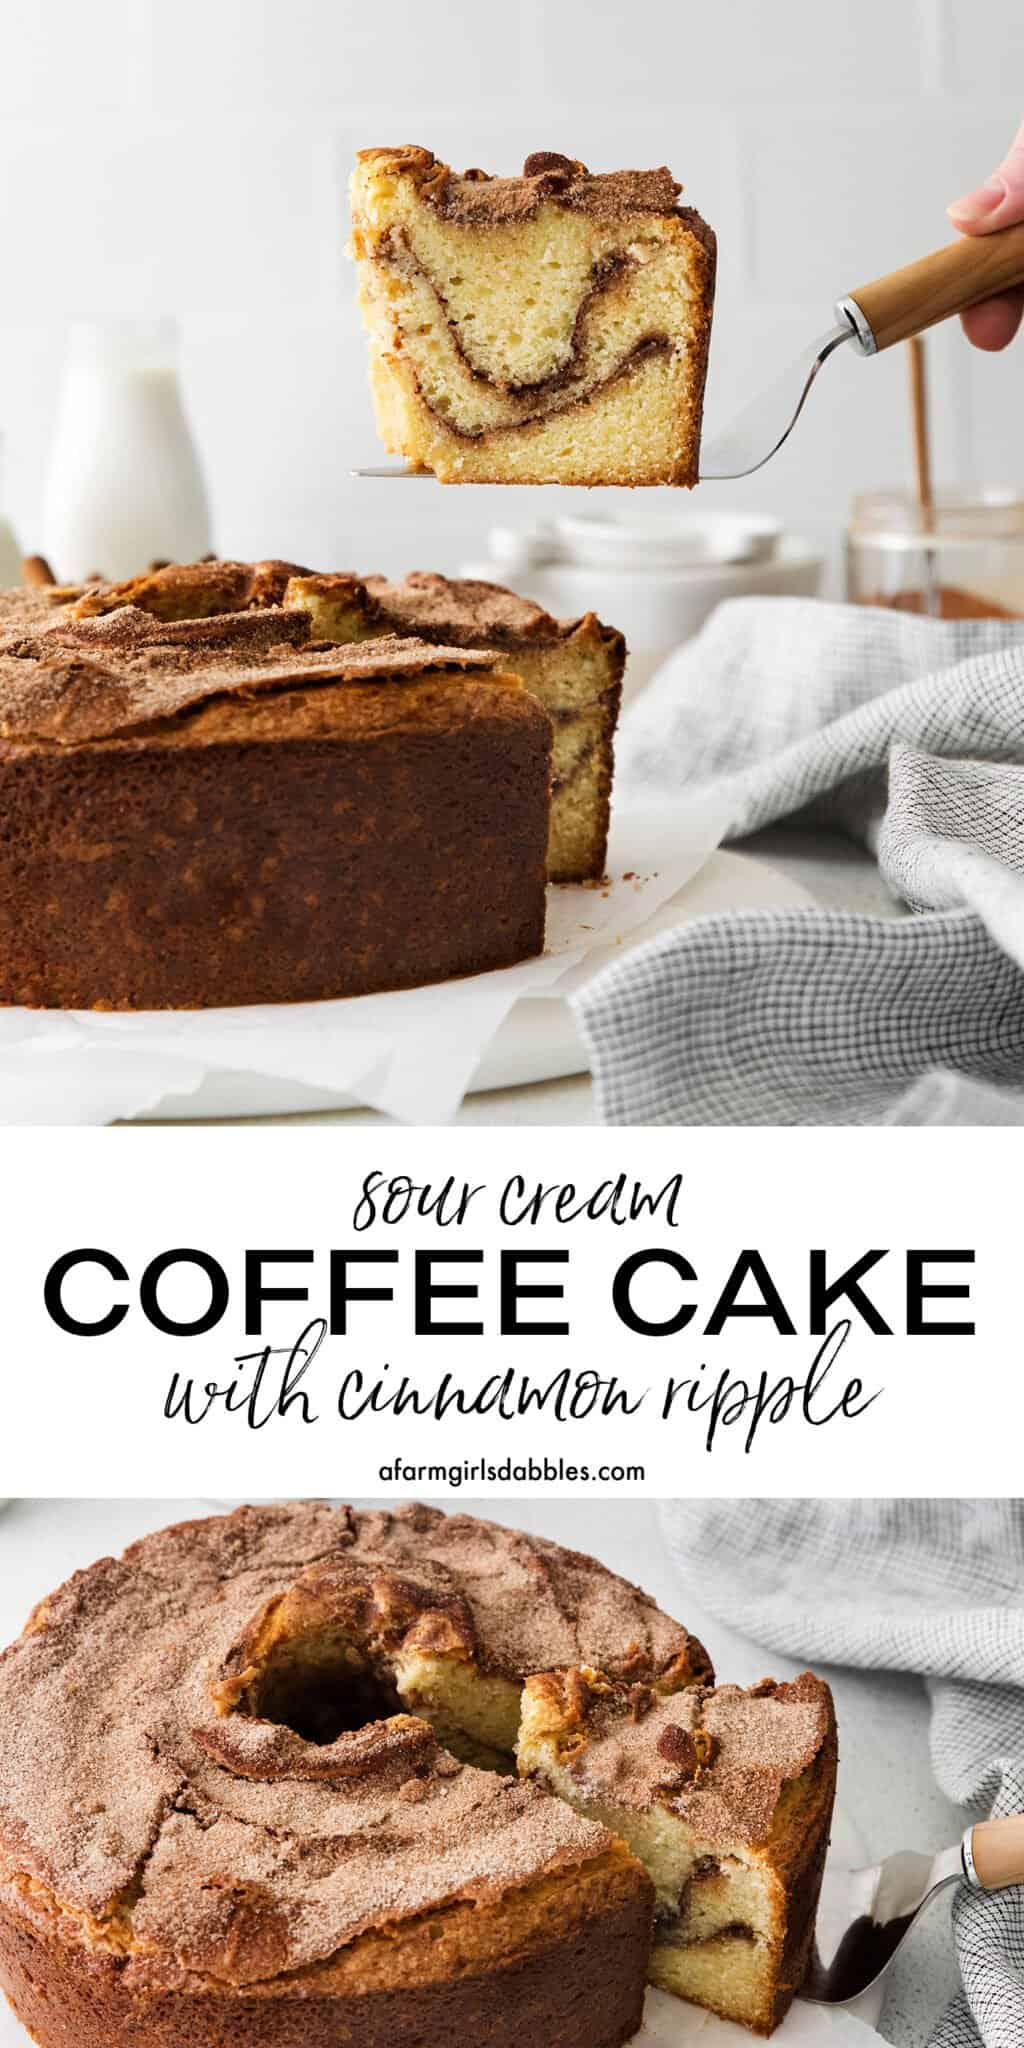 Sour Cream Coffee Cake with Cinnamon Ripple l A Farmgirl's Dabbles